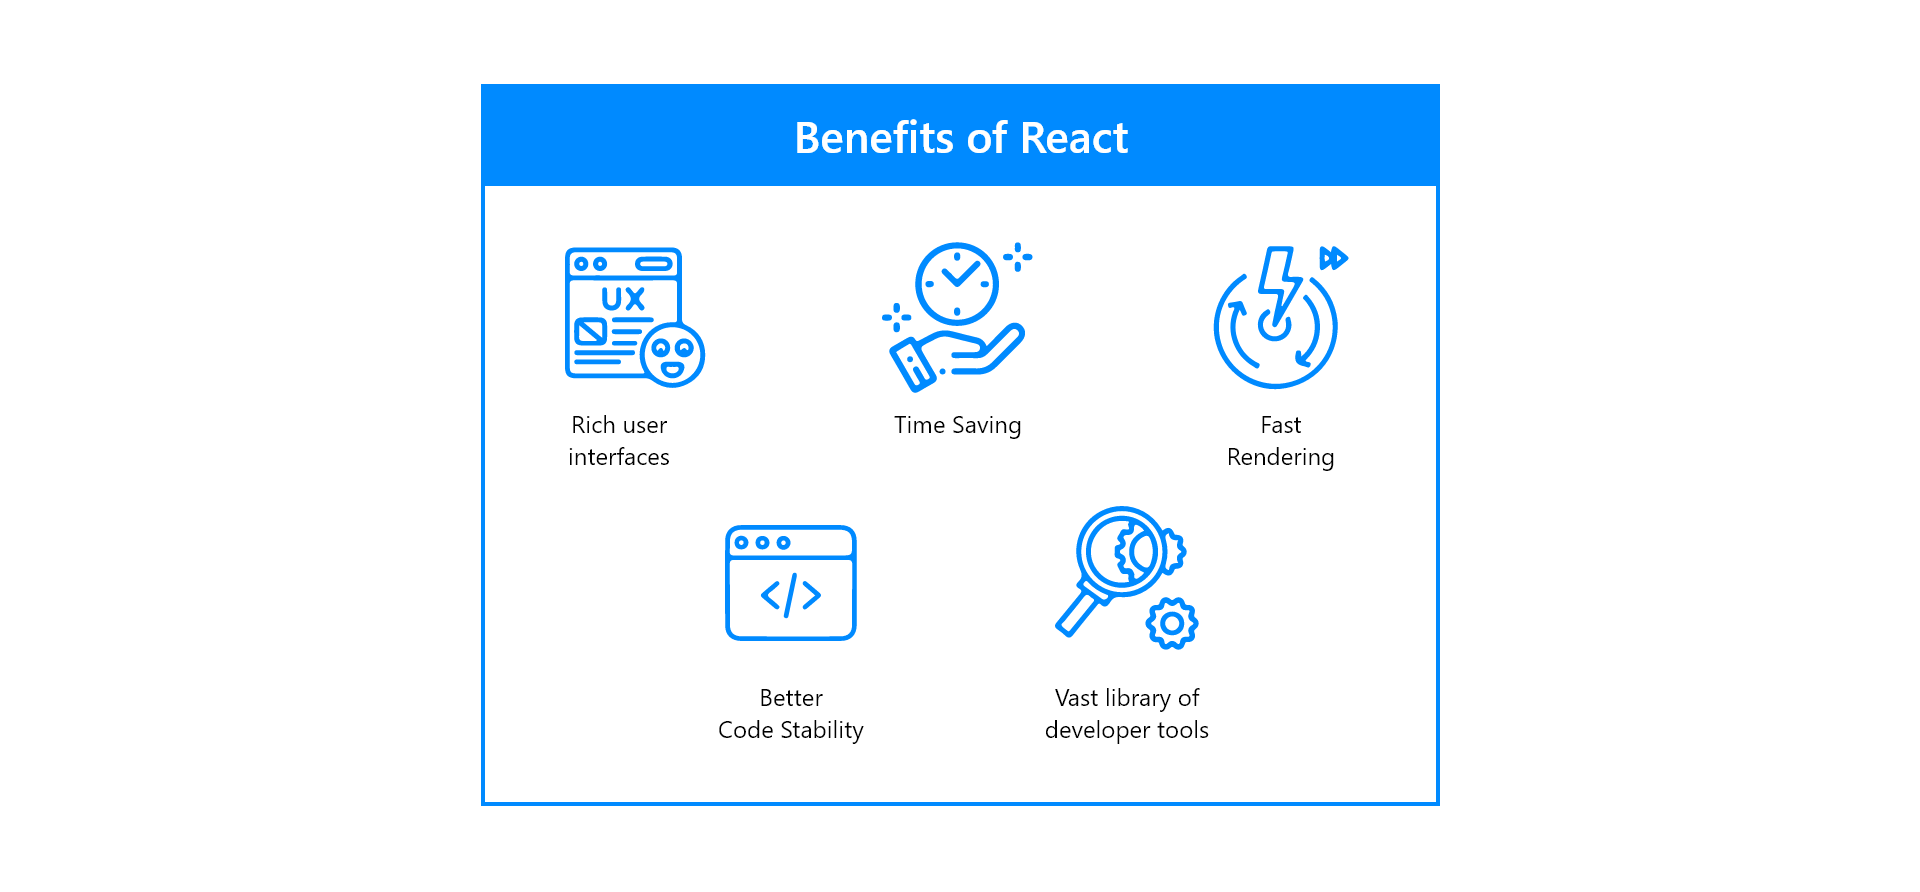 Benefits of React